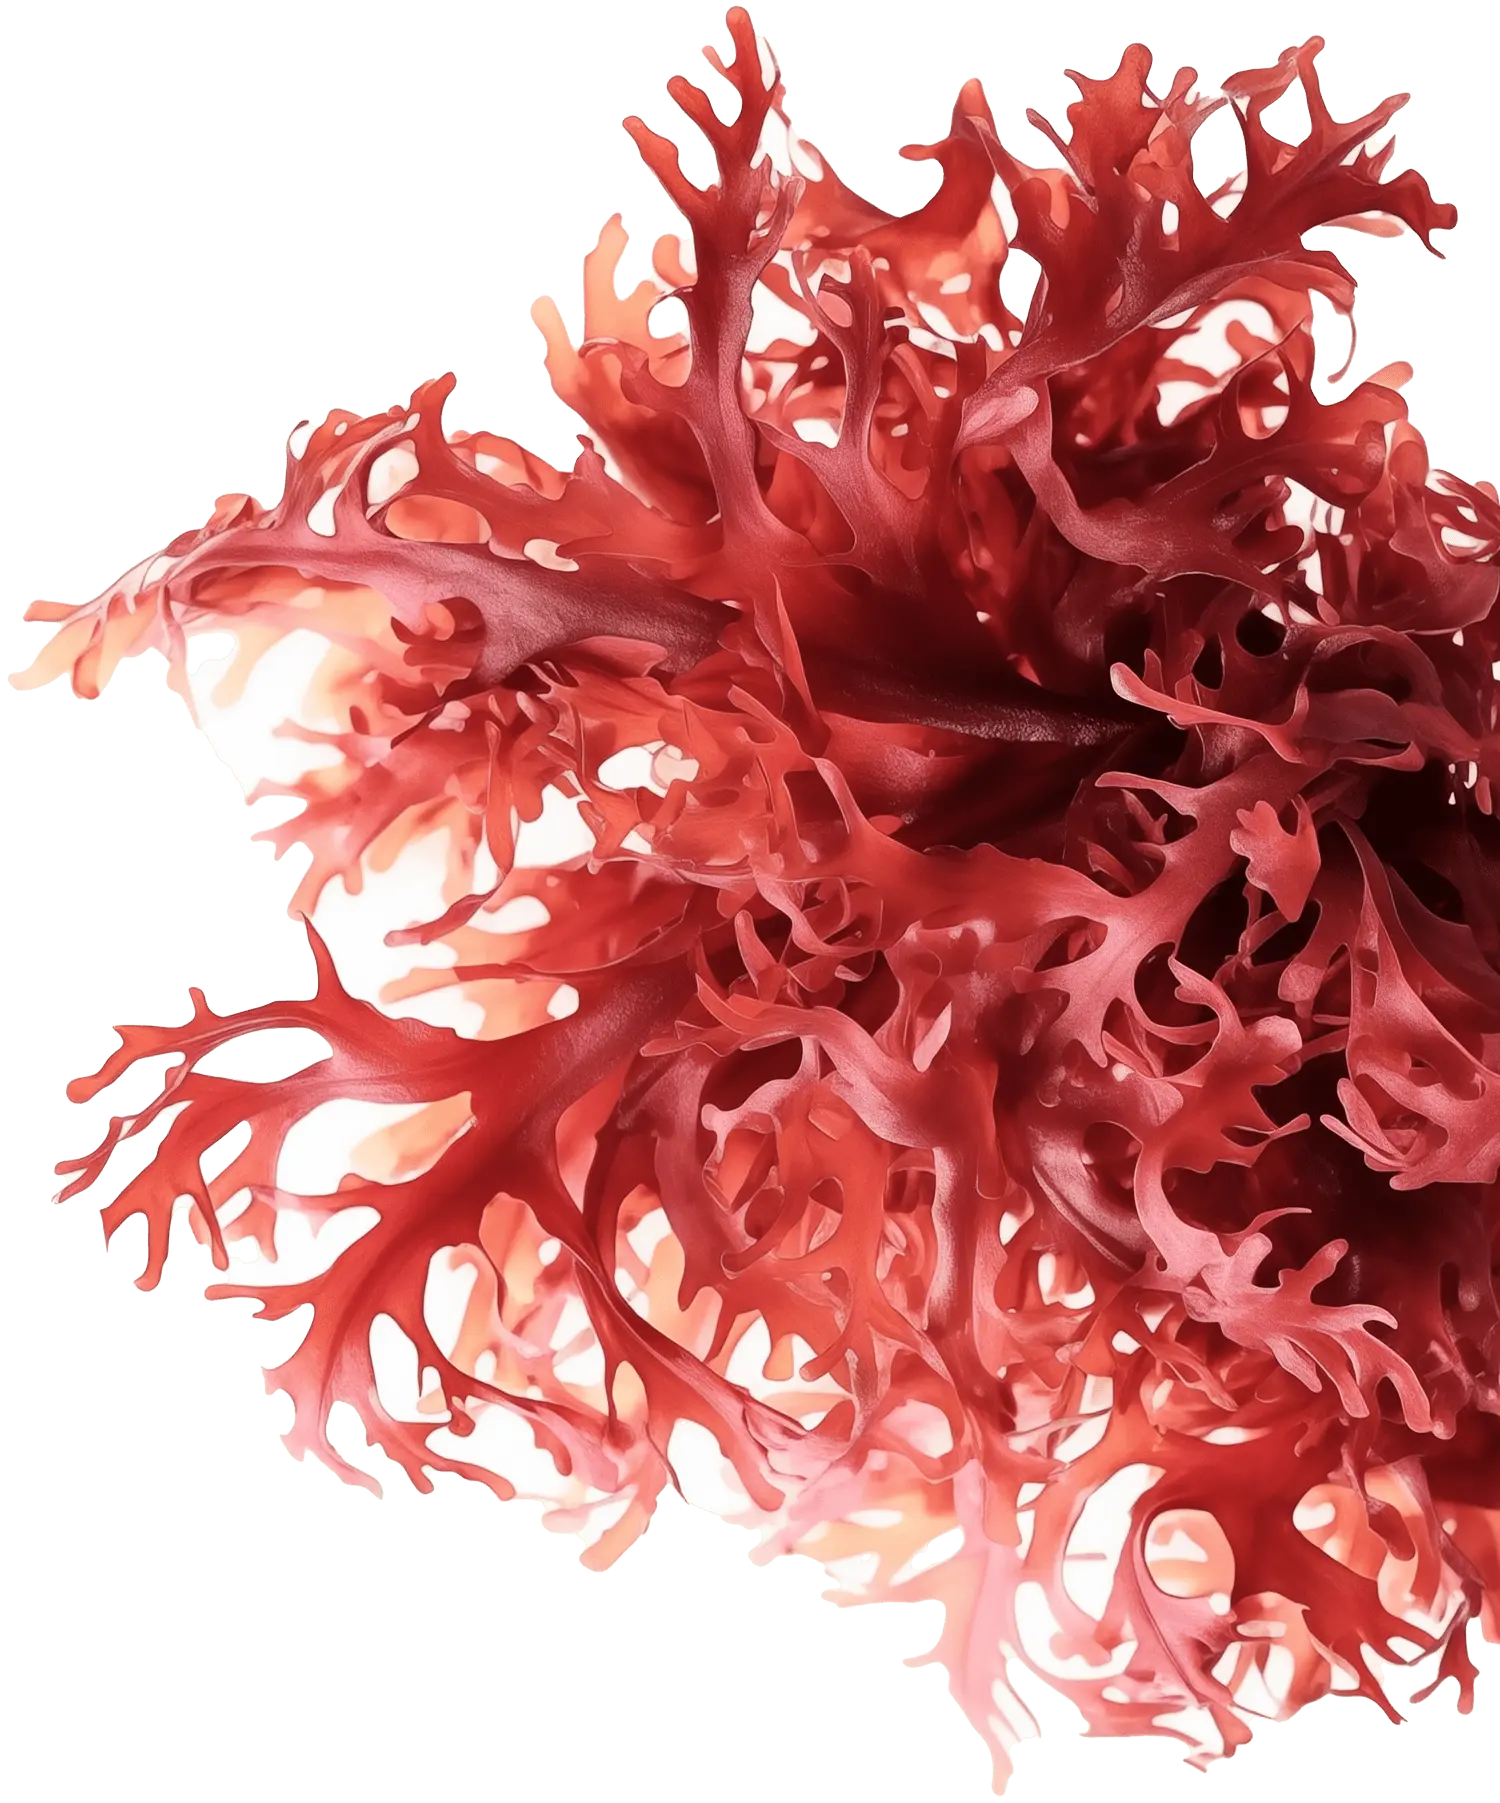 Red seaweed astaxantina